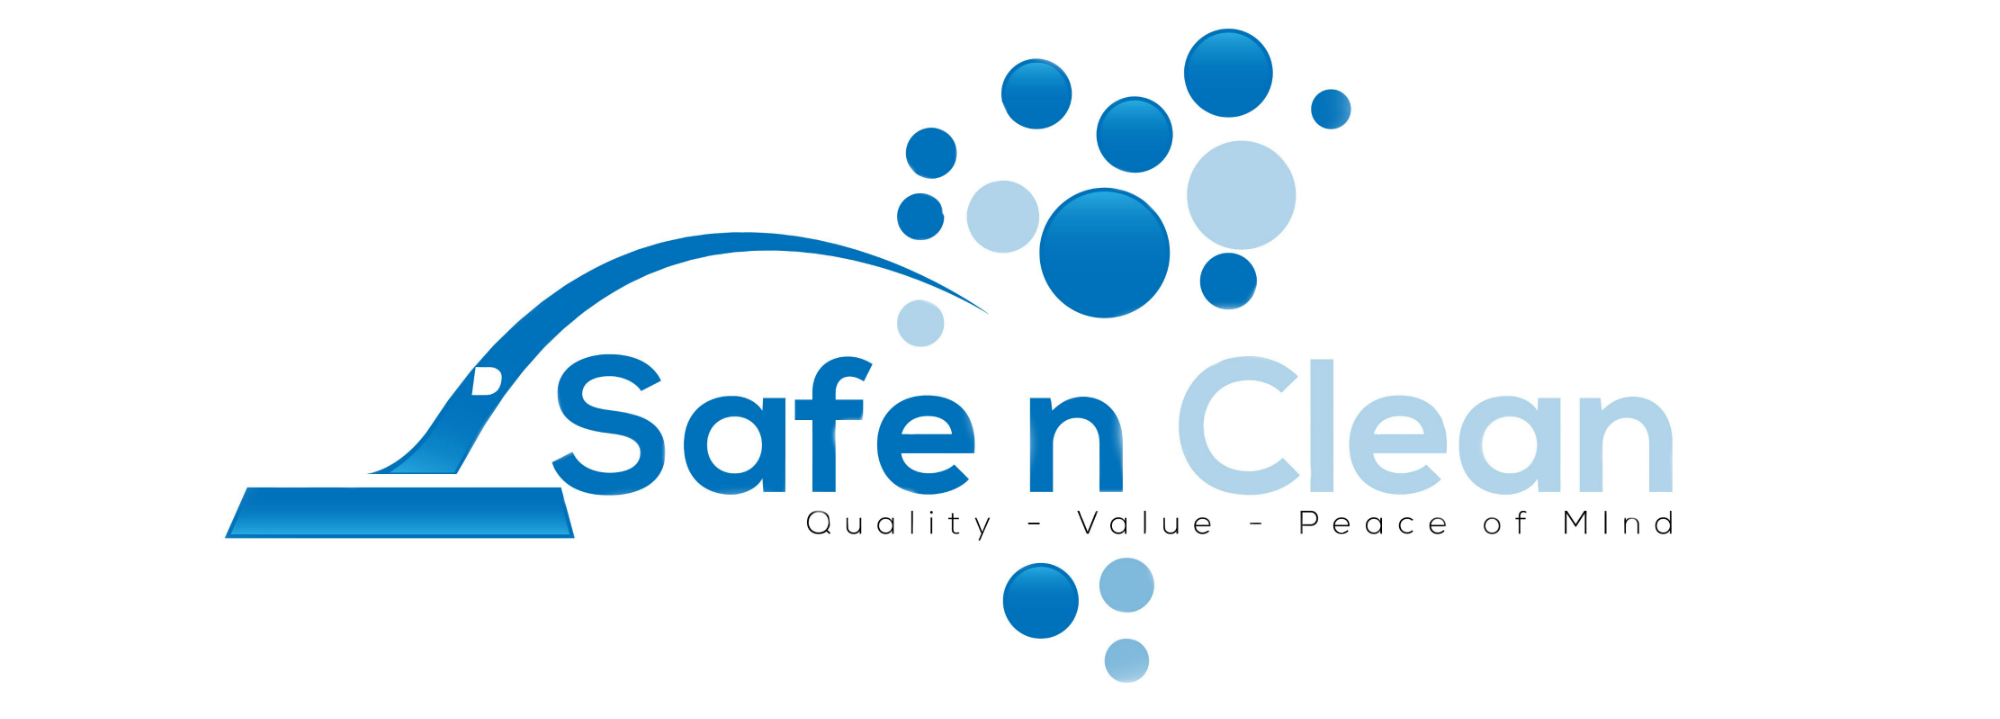 Safe n clean